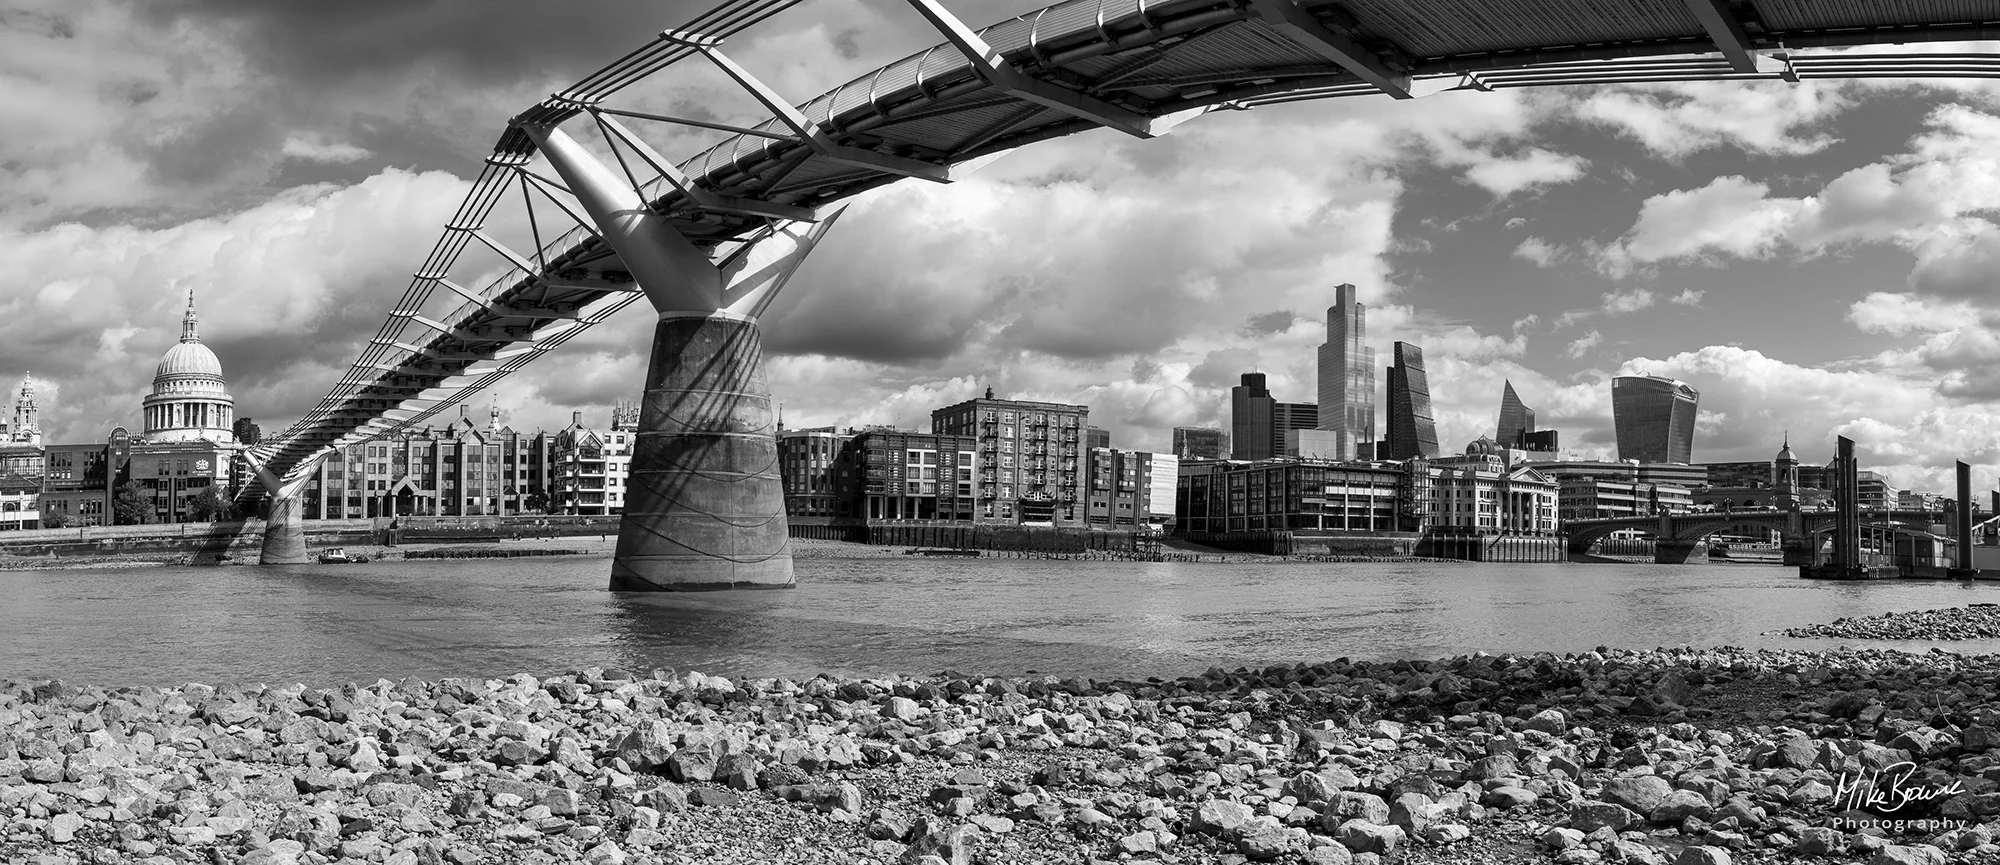 Undeside of millennium bridge in London